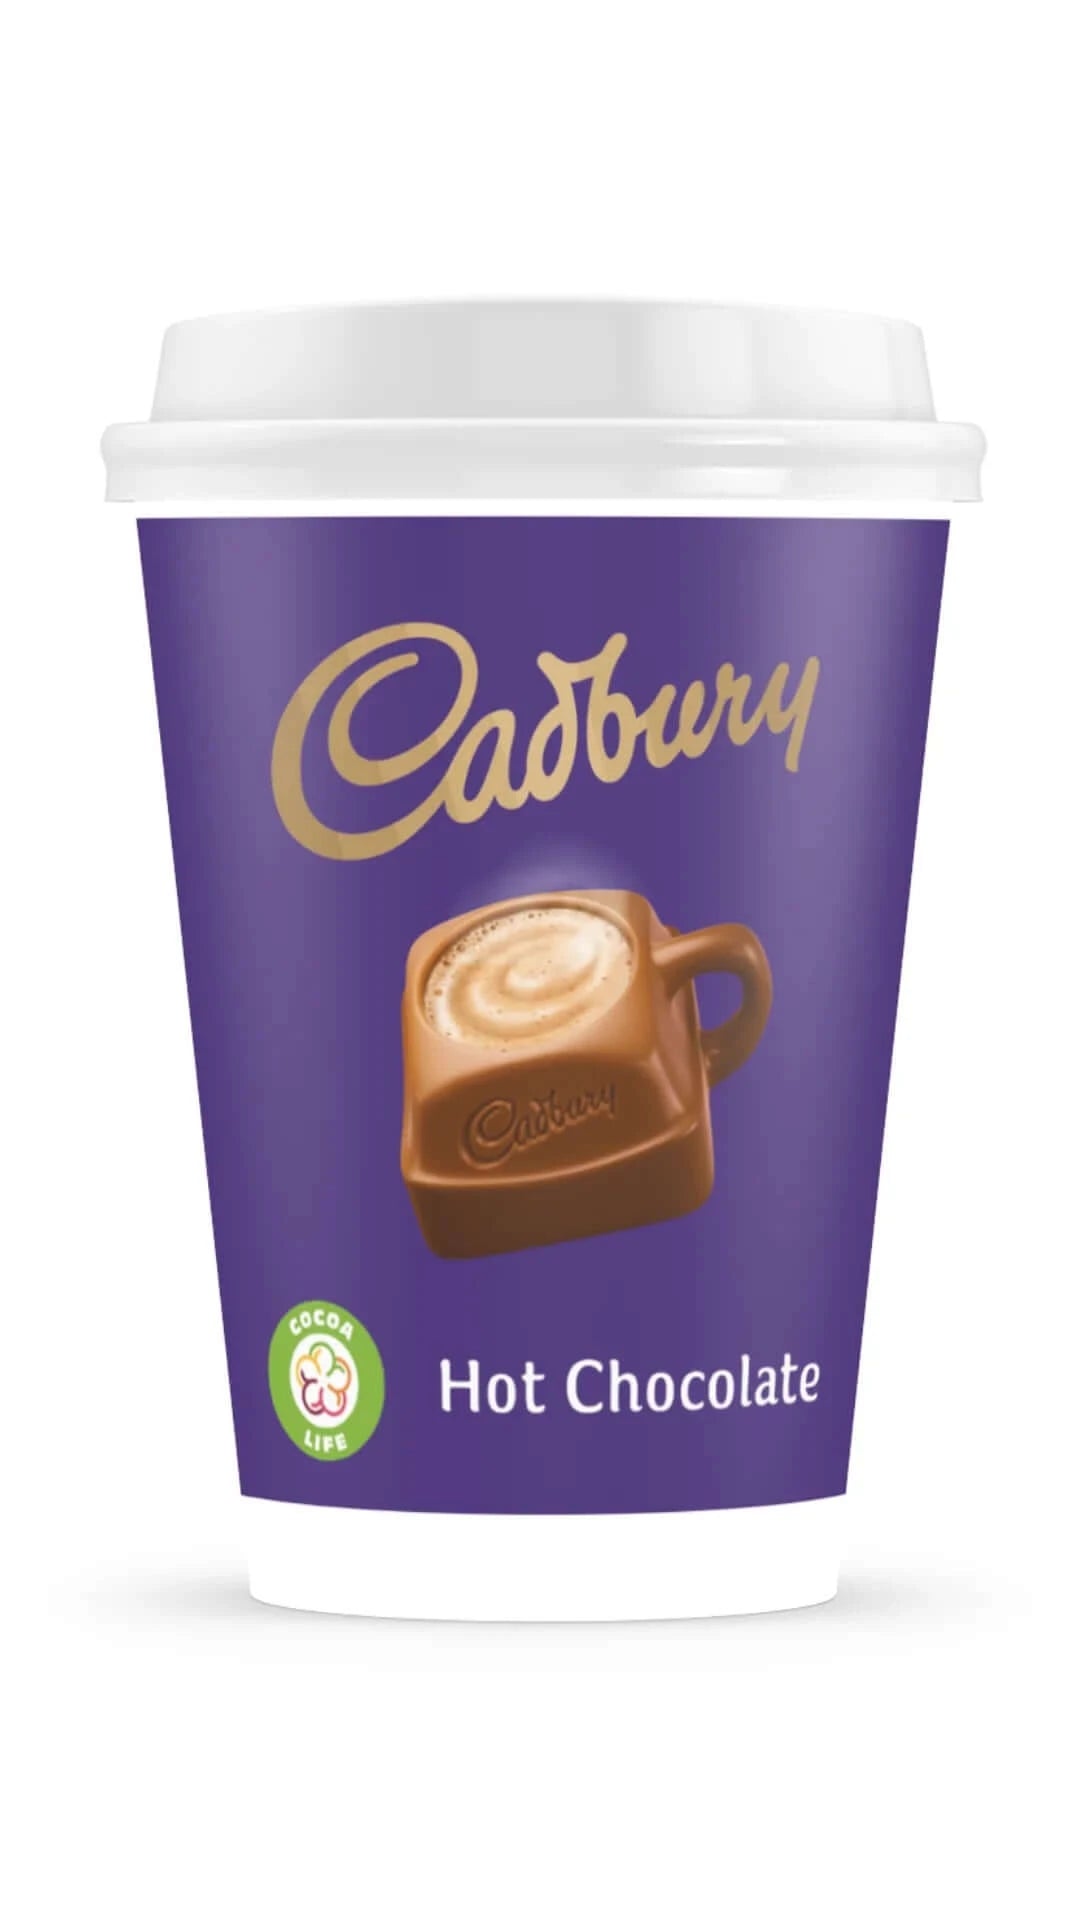 Cadbury One Vending Hot Chocolate & 12oz Cadbury Double Wall Paper Cups Package